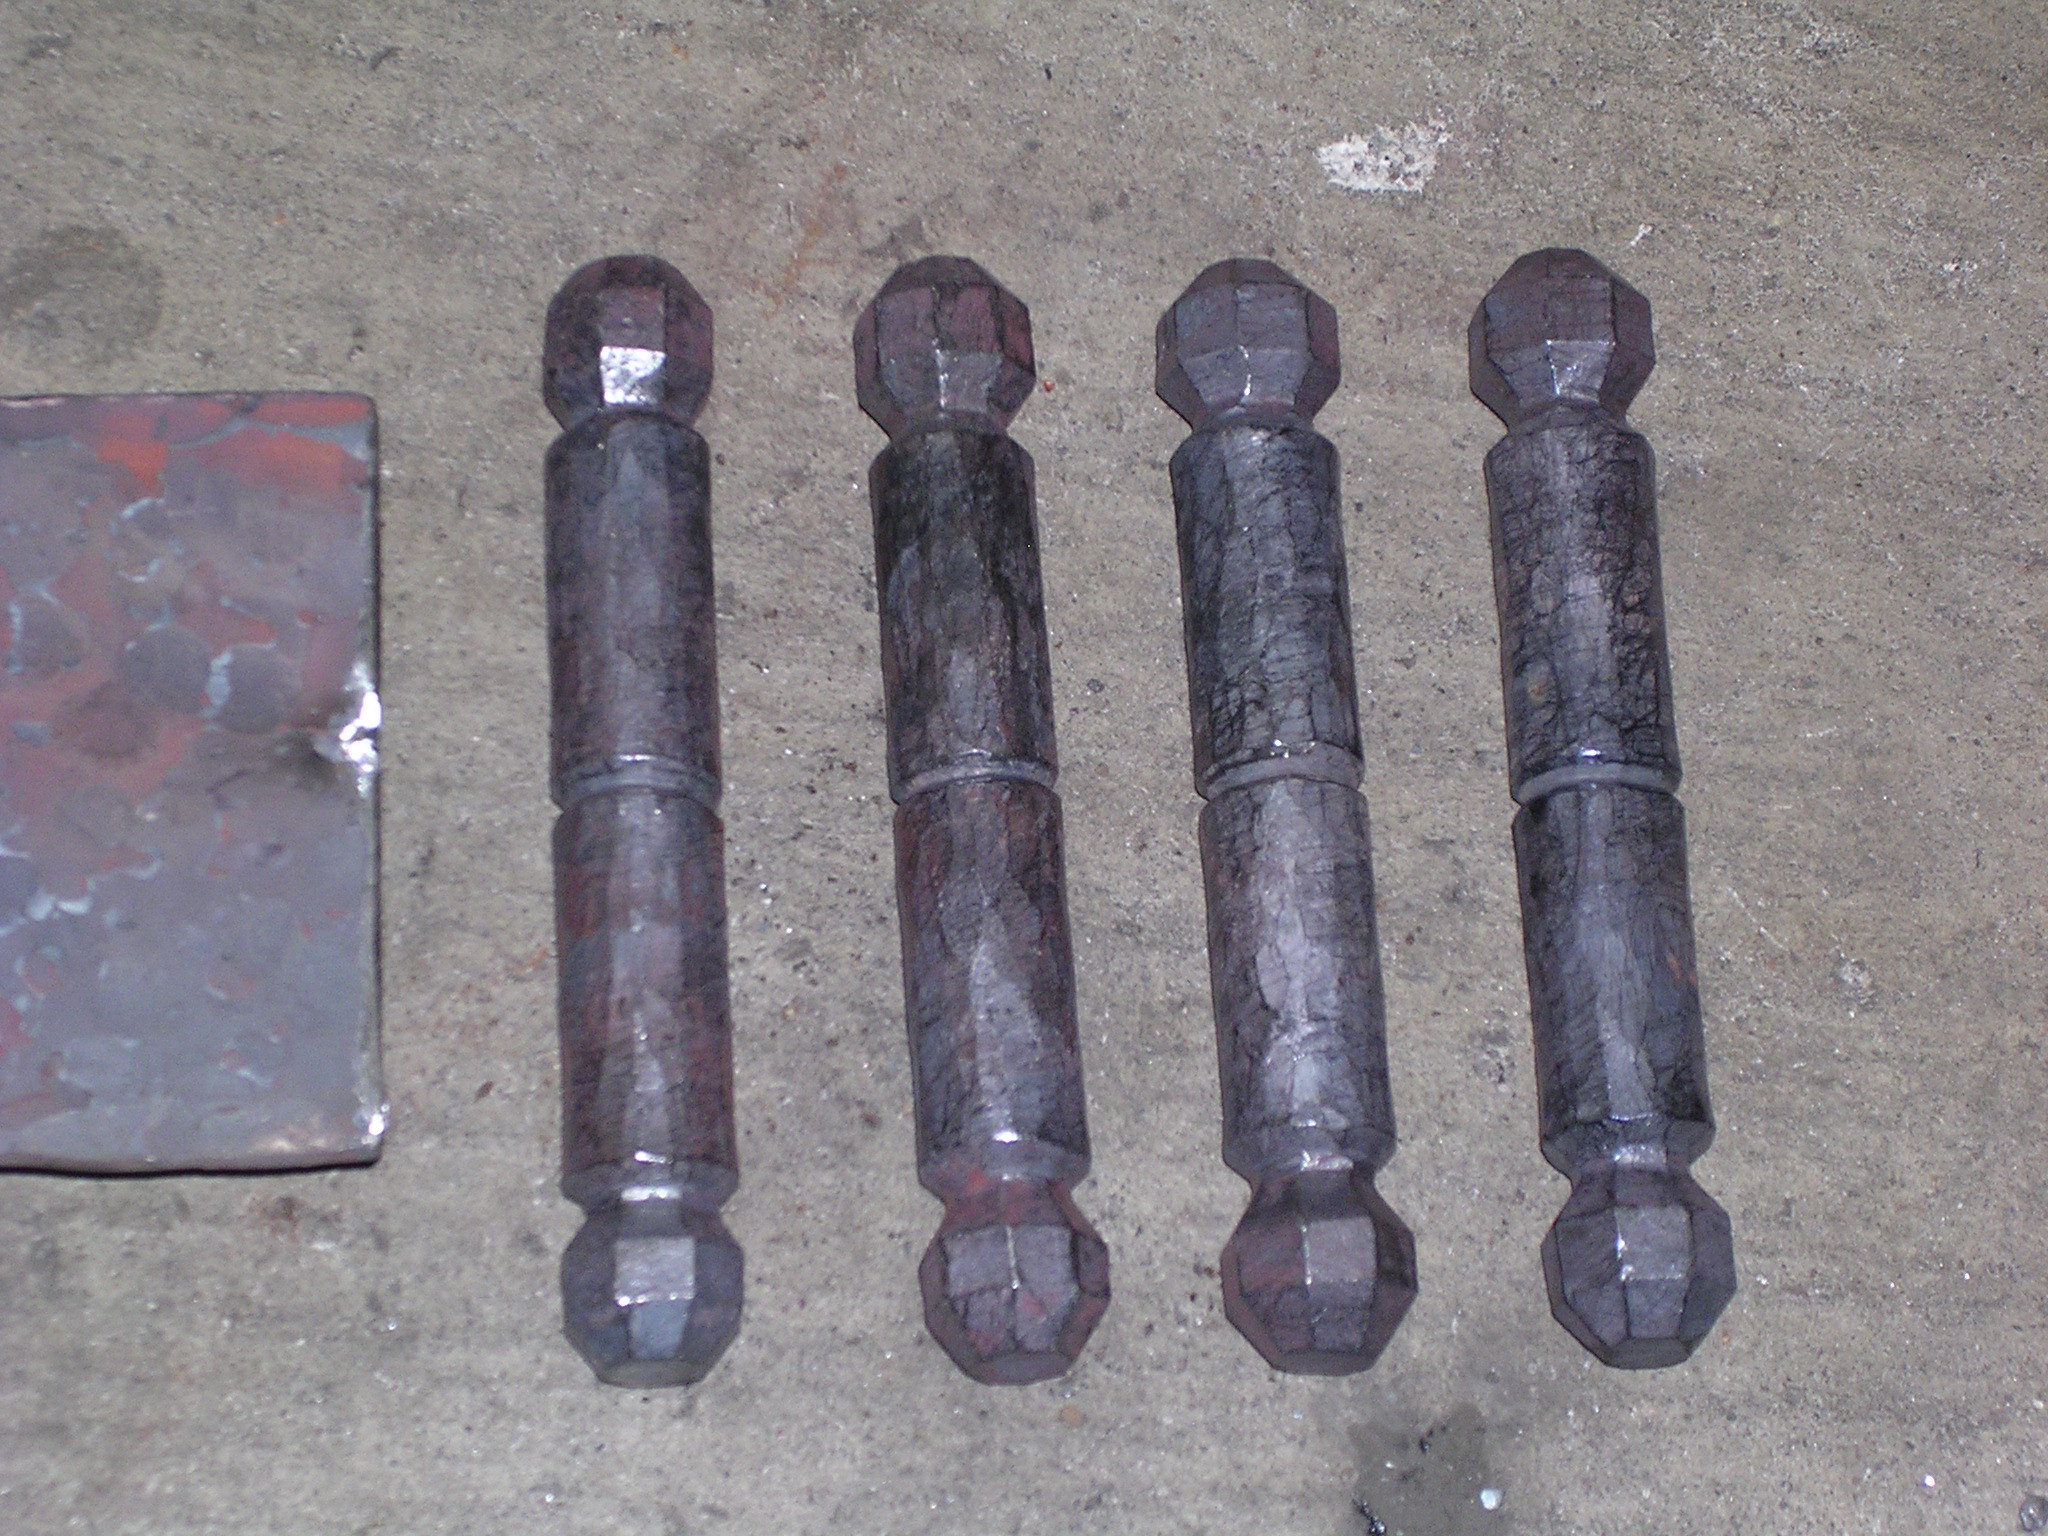 All 4 false hinge barrels